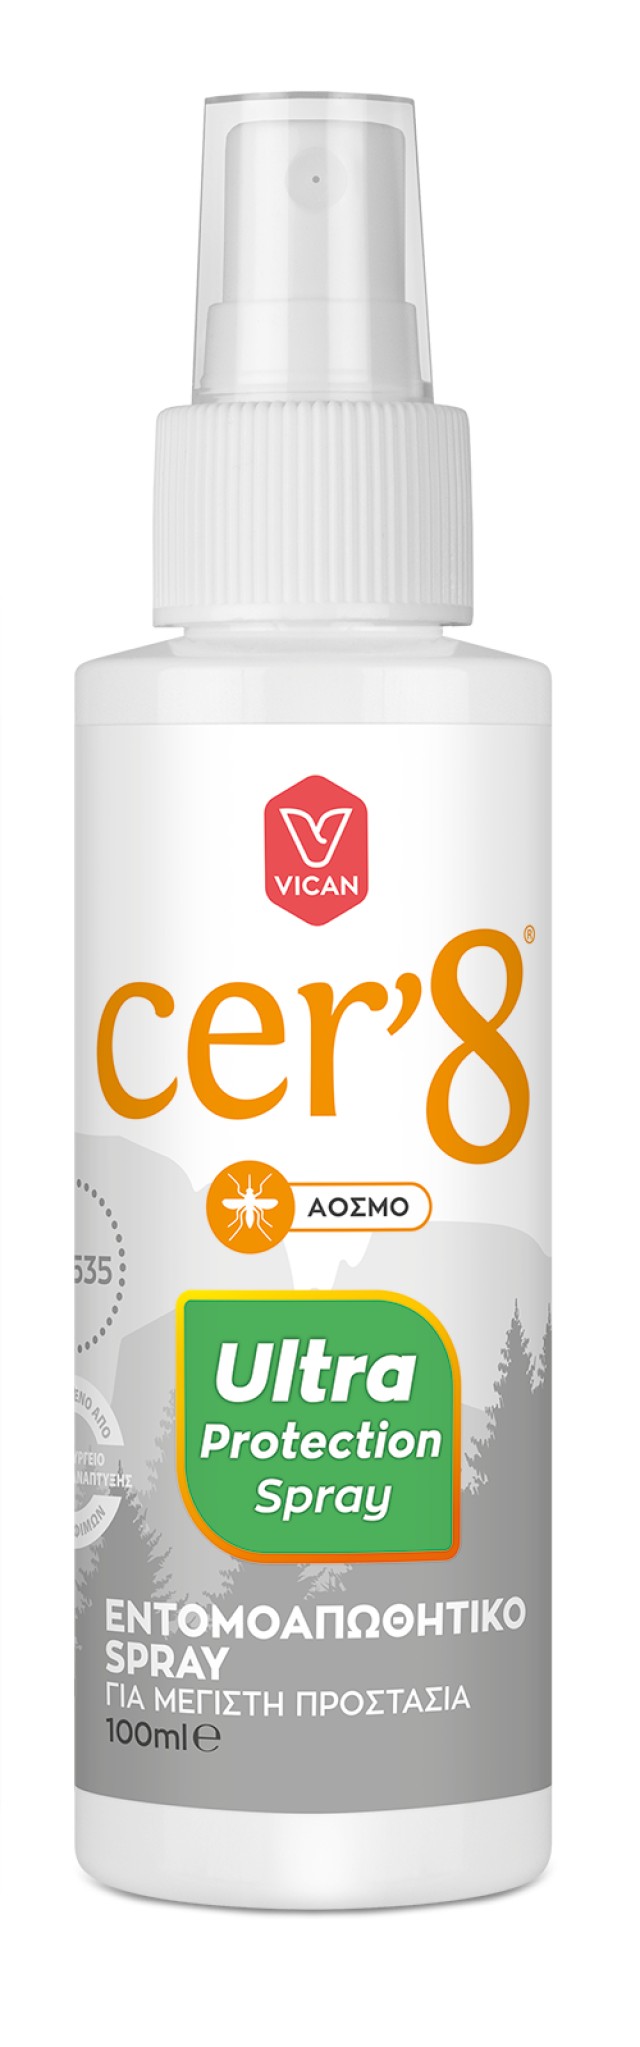 Vican Cer'8 Ultra Protection Εντομοαπωθητικό Spray 100ml